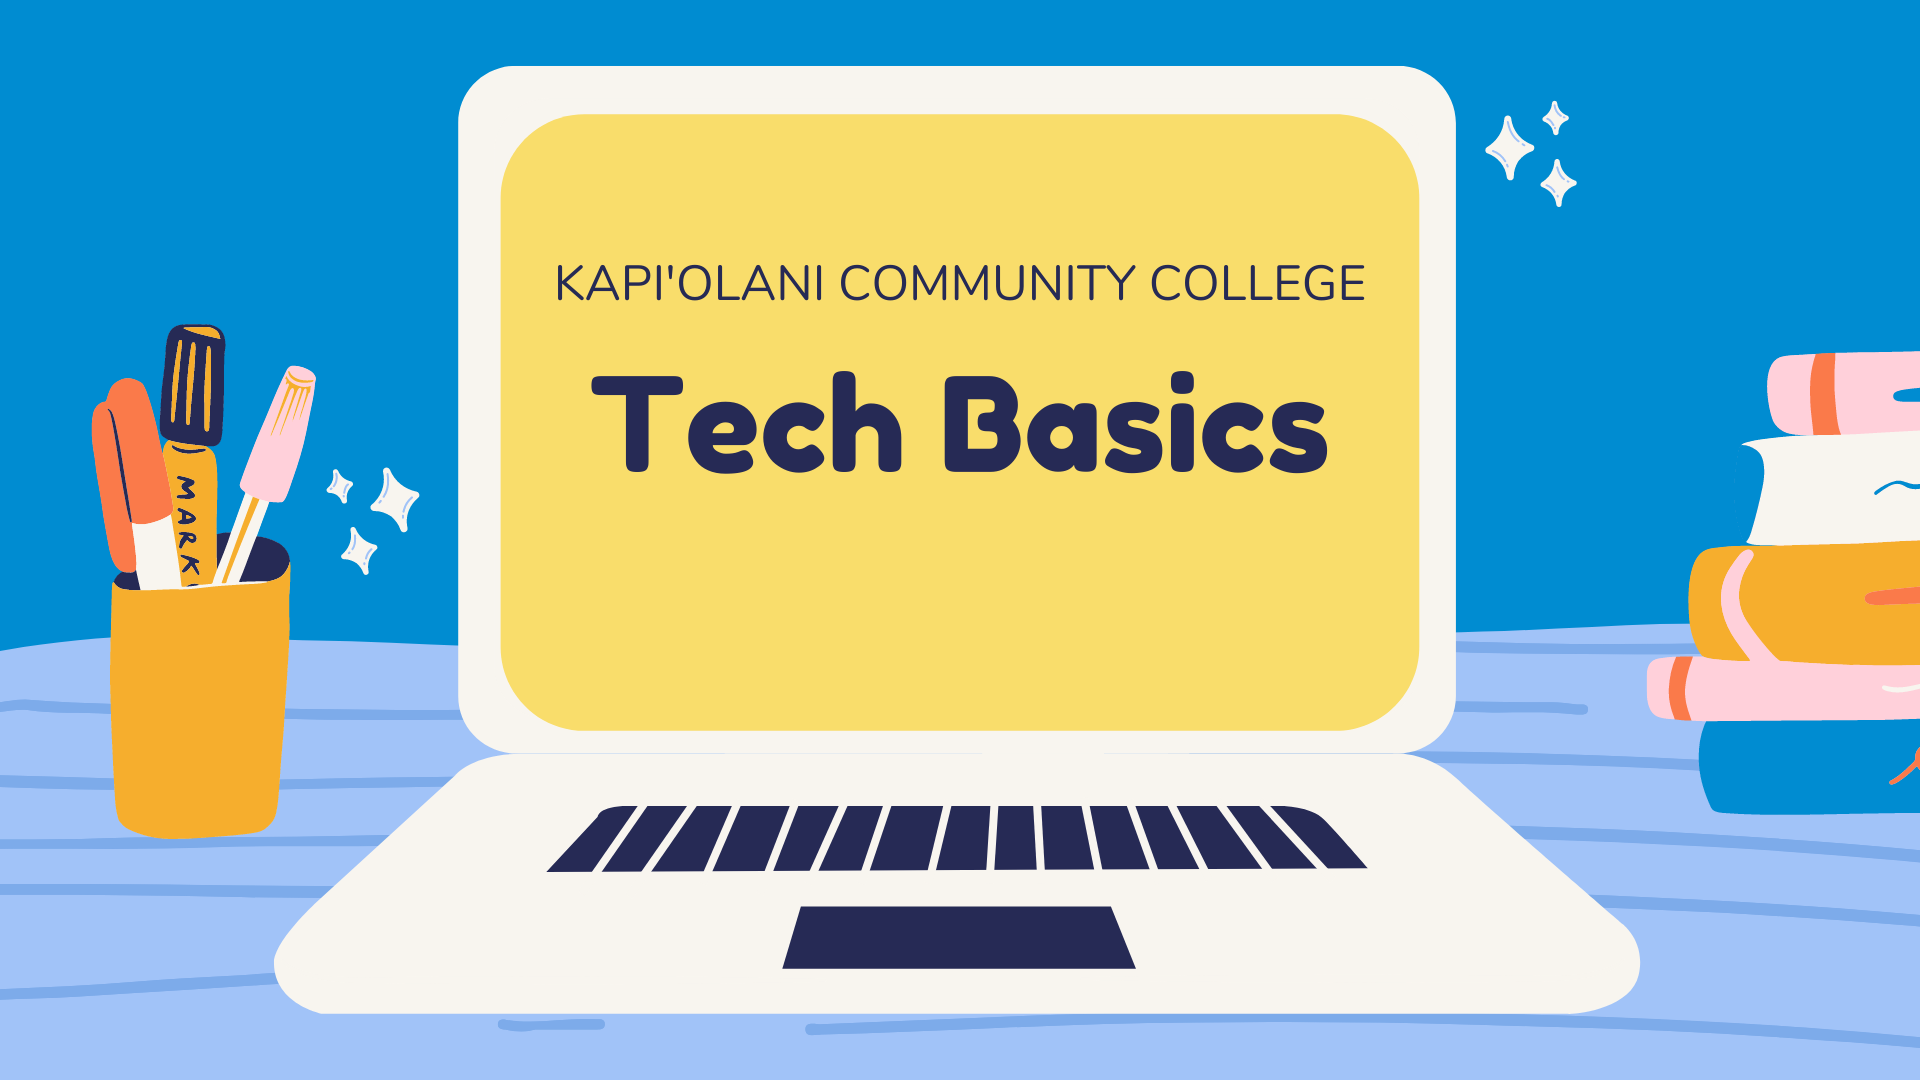 Kapi'olani Community College Tech Basics flyer